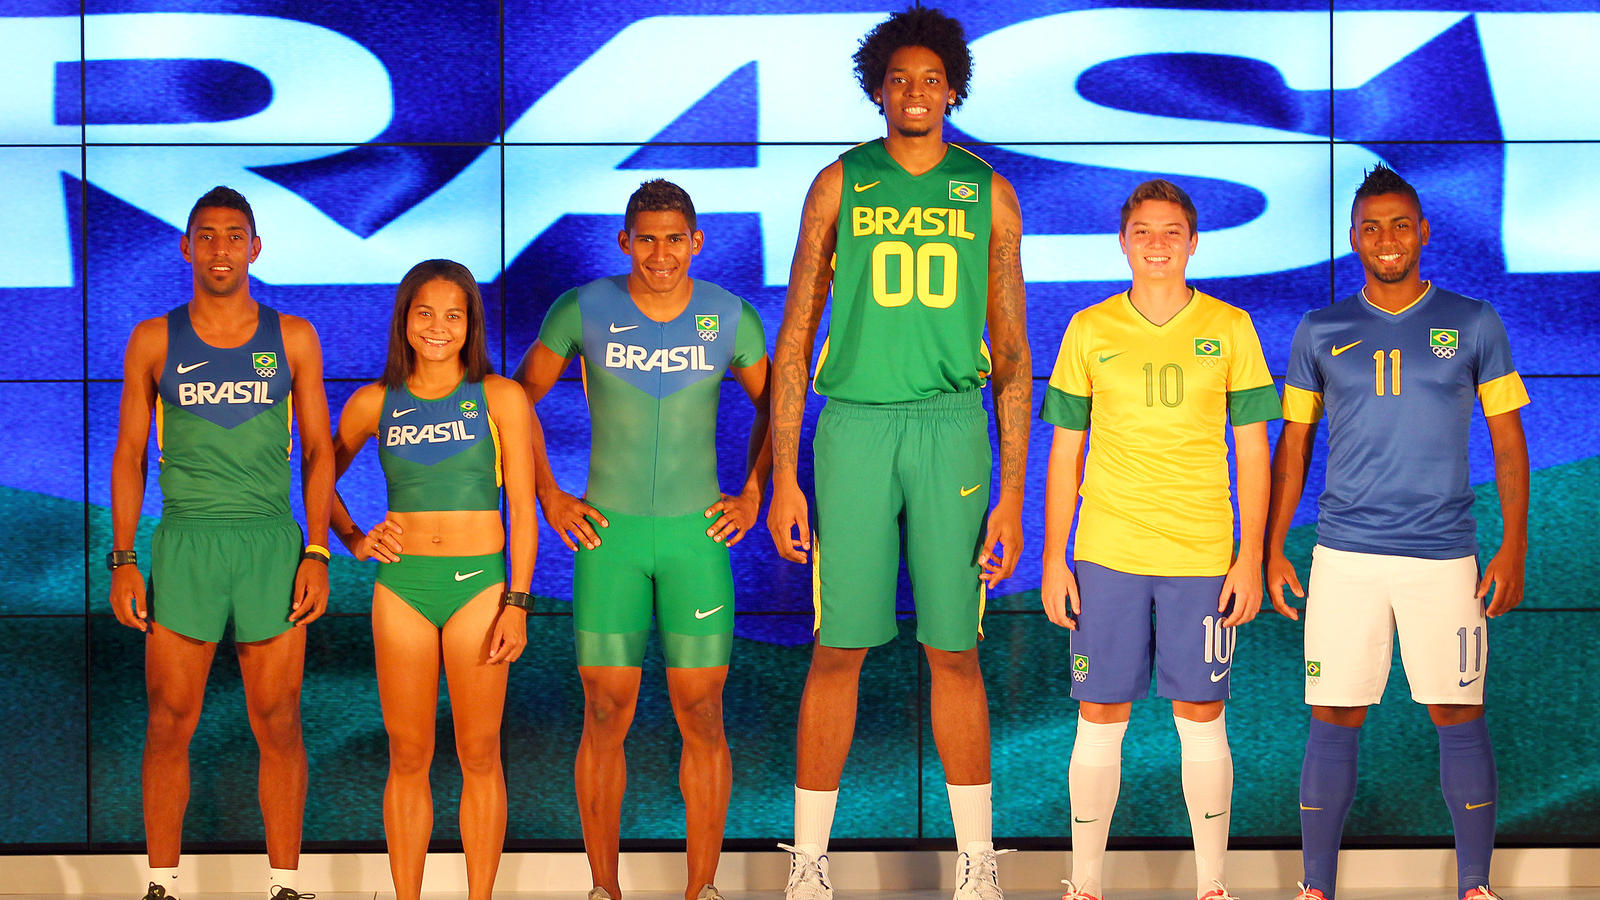 No More Nike - Peak To Make Brazil 2020 Olympics Kits - Footy Headlines